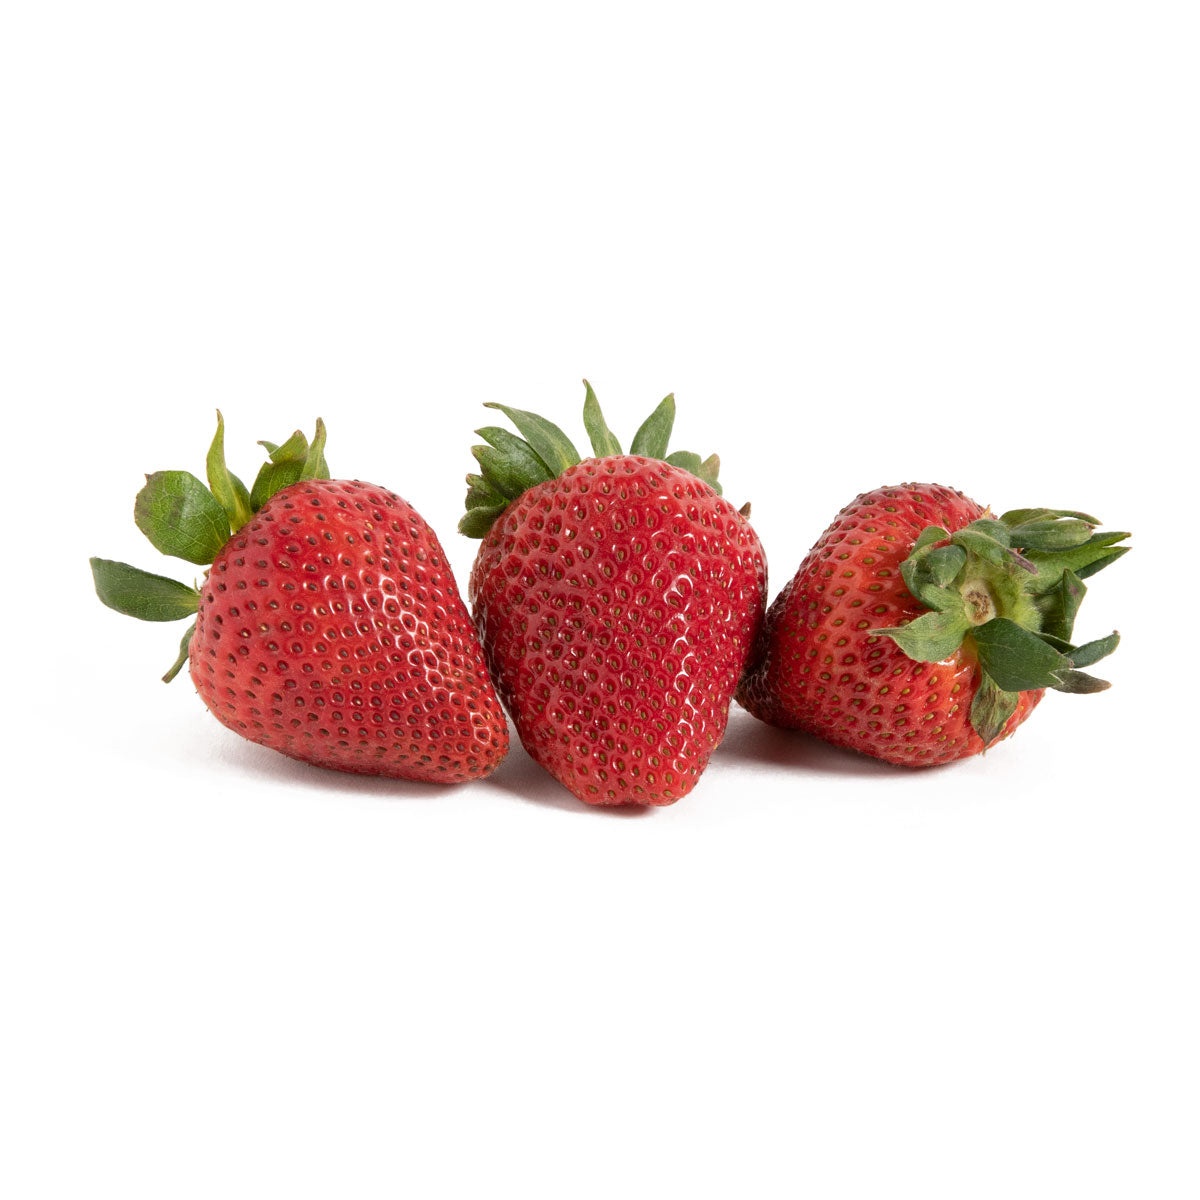 California Giant Berry Farms Organic Strawberries 1 lb Box